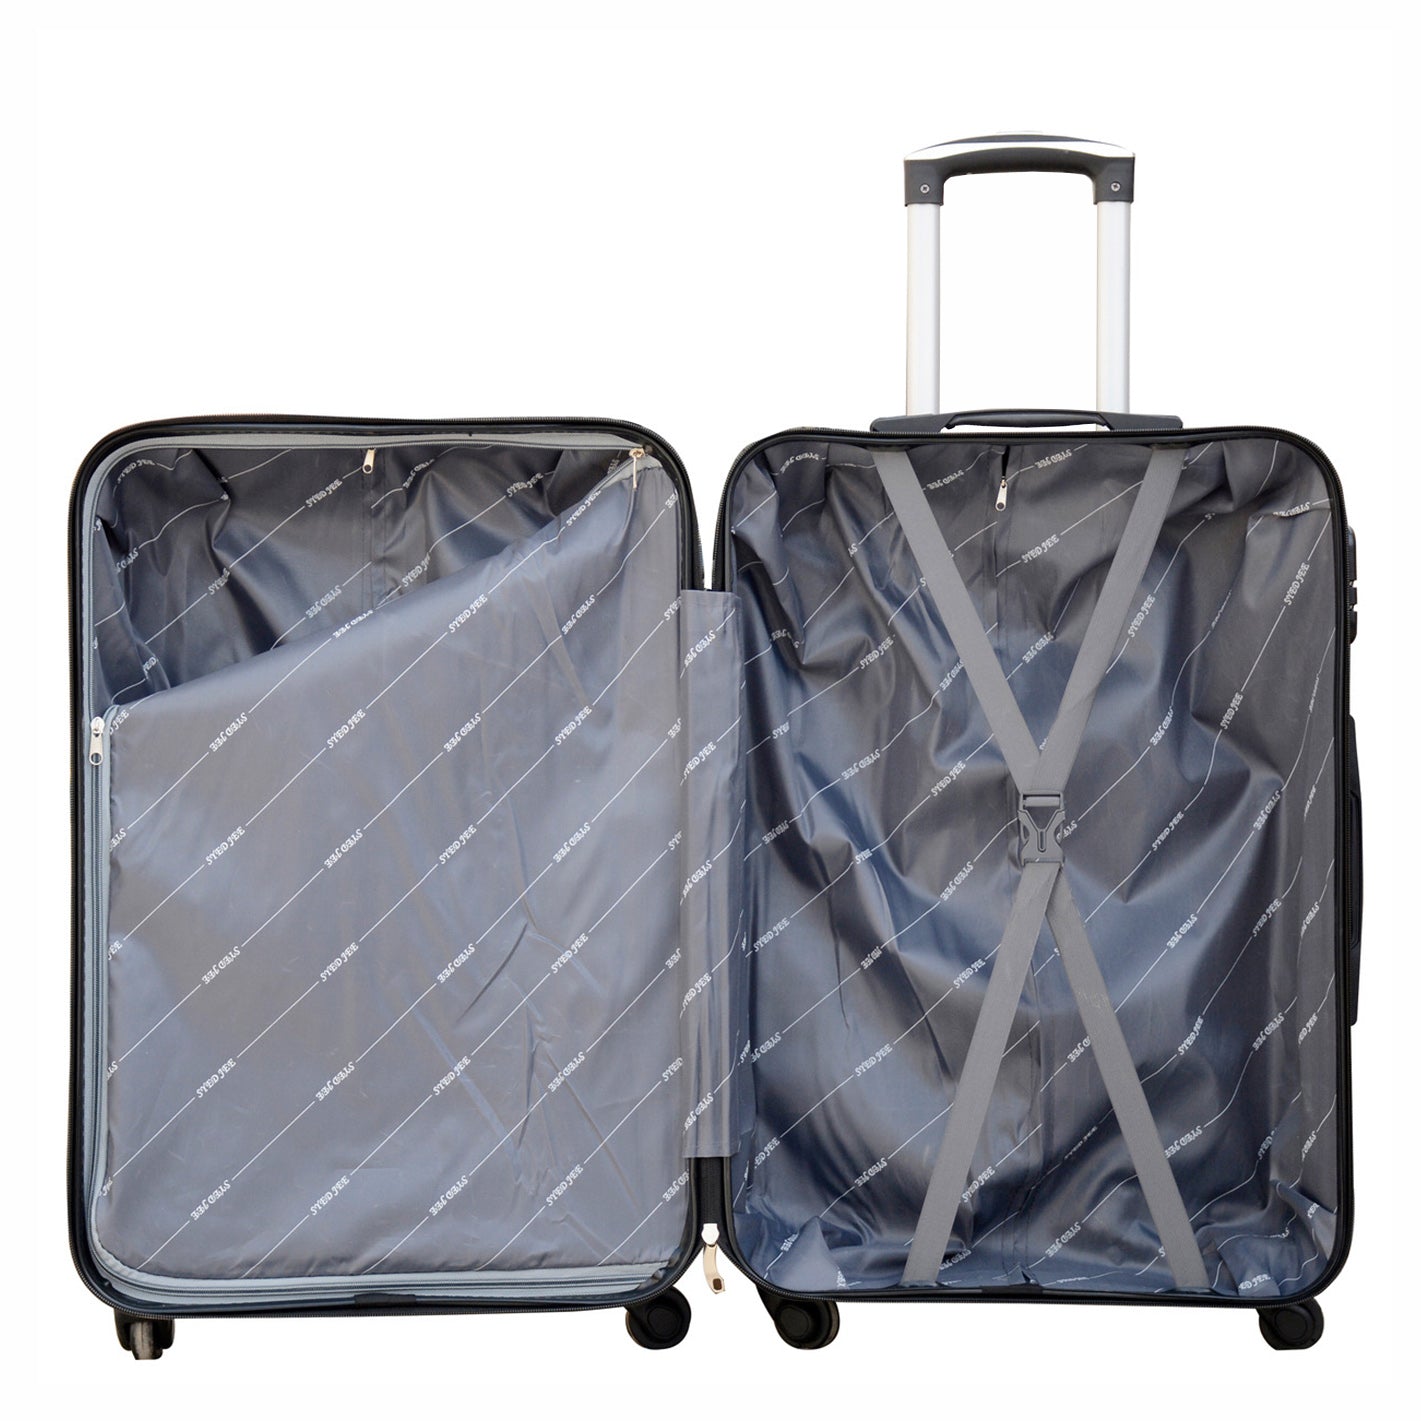 20" Black Colour SJ ABS Luggage Lightweight Hard Case Trolley Bag